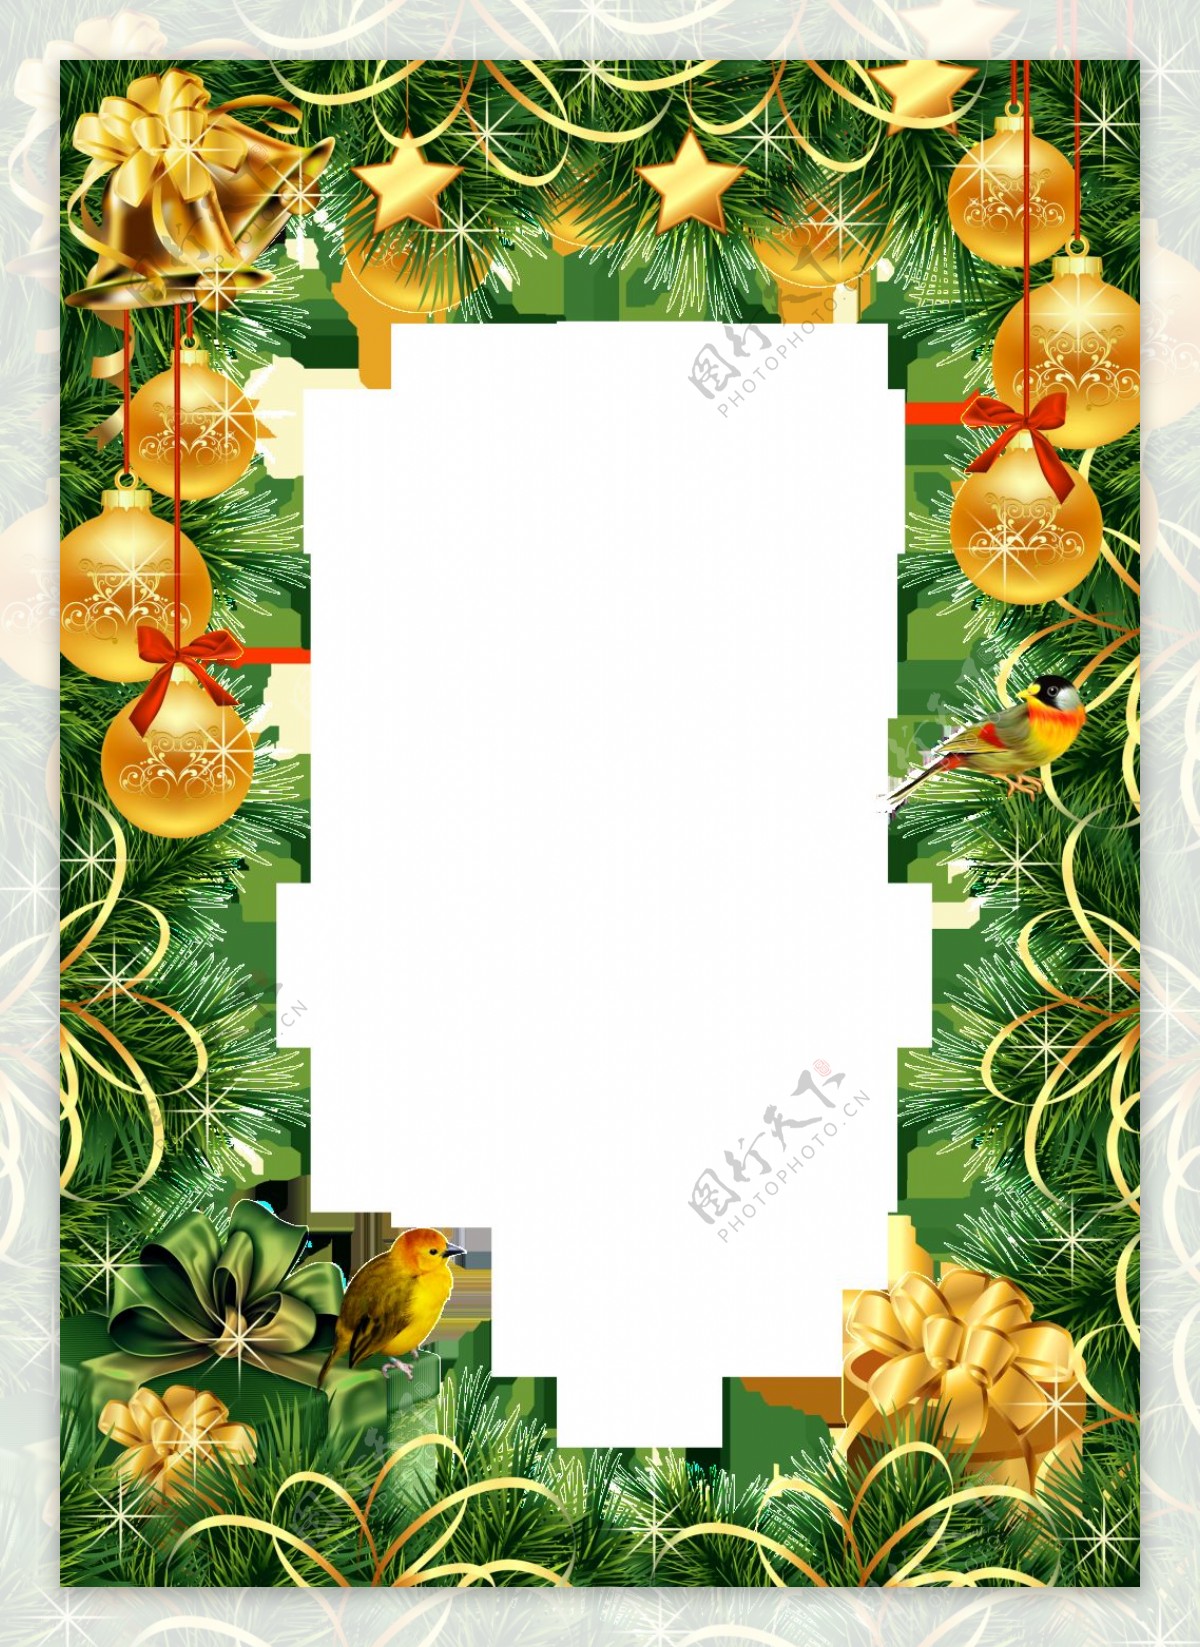 圣诞PNG装饰物边框